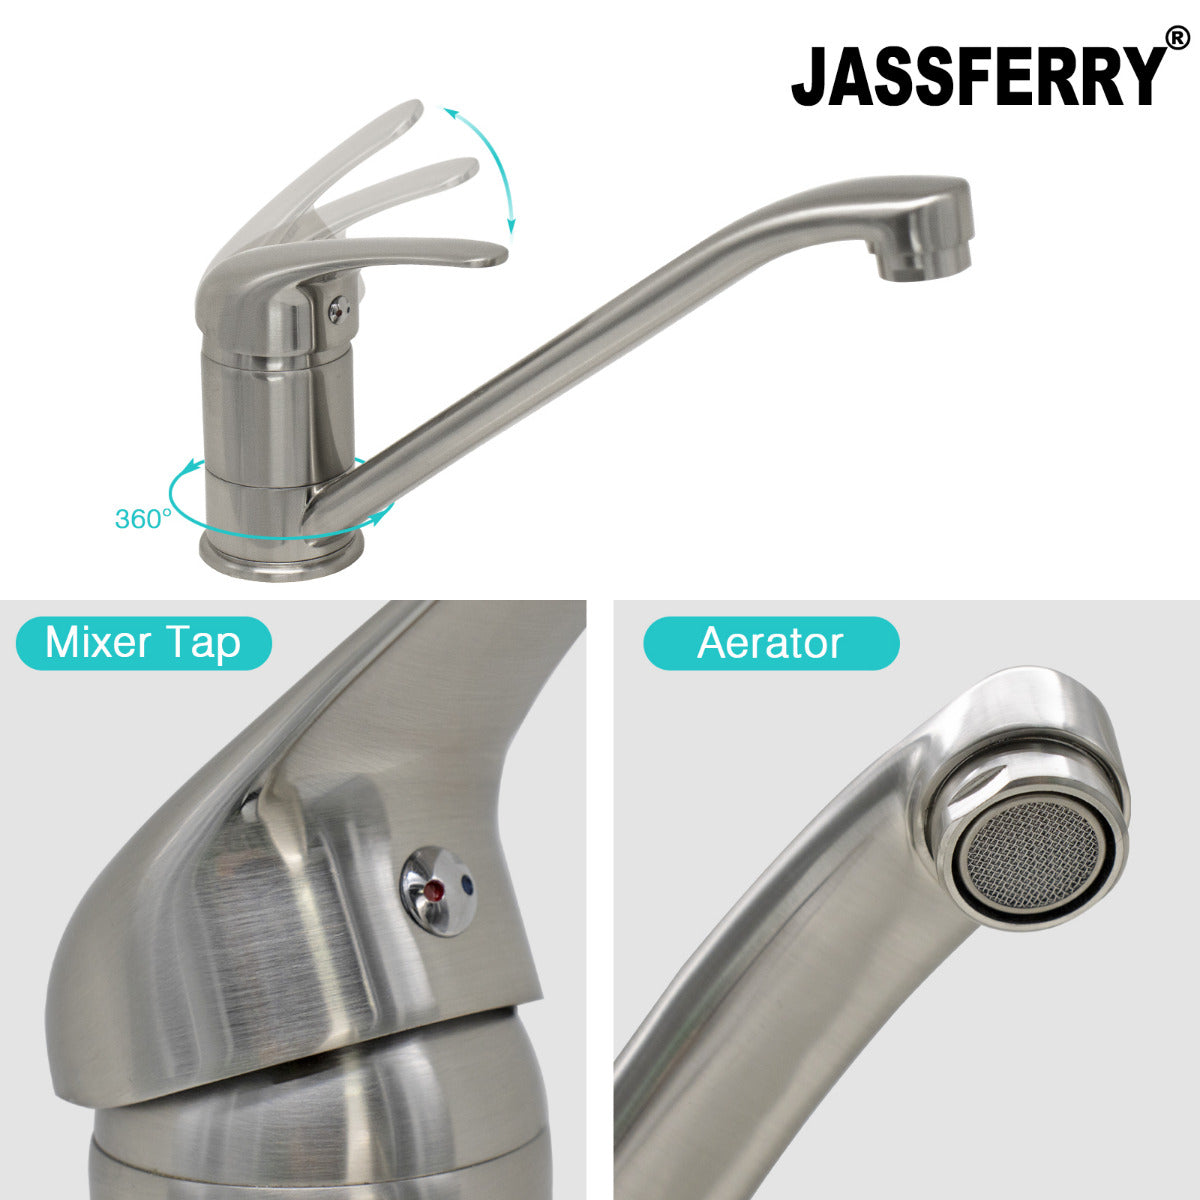 JassferryJASSFERRY New Nickel Brushed Kitchen Sink Mixer Taps Single Lever Swivel SpoutKitchen taps